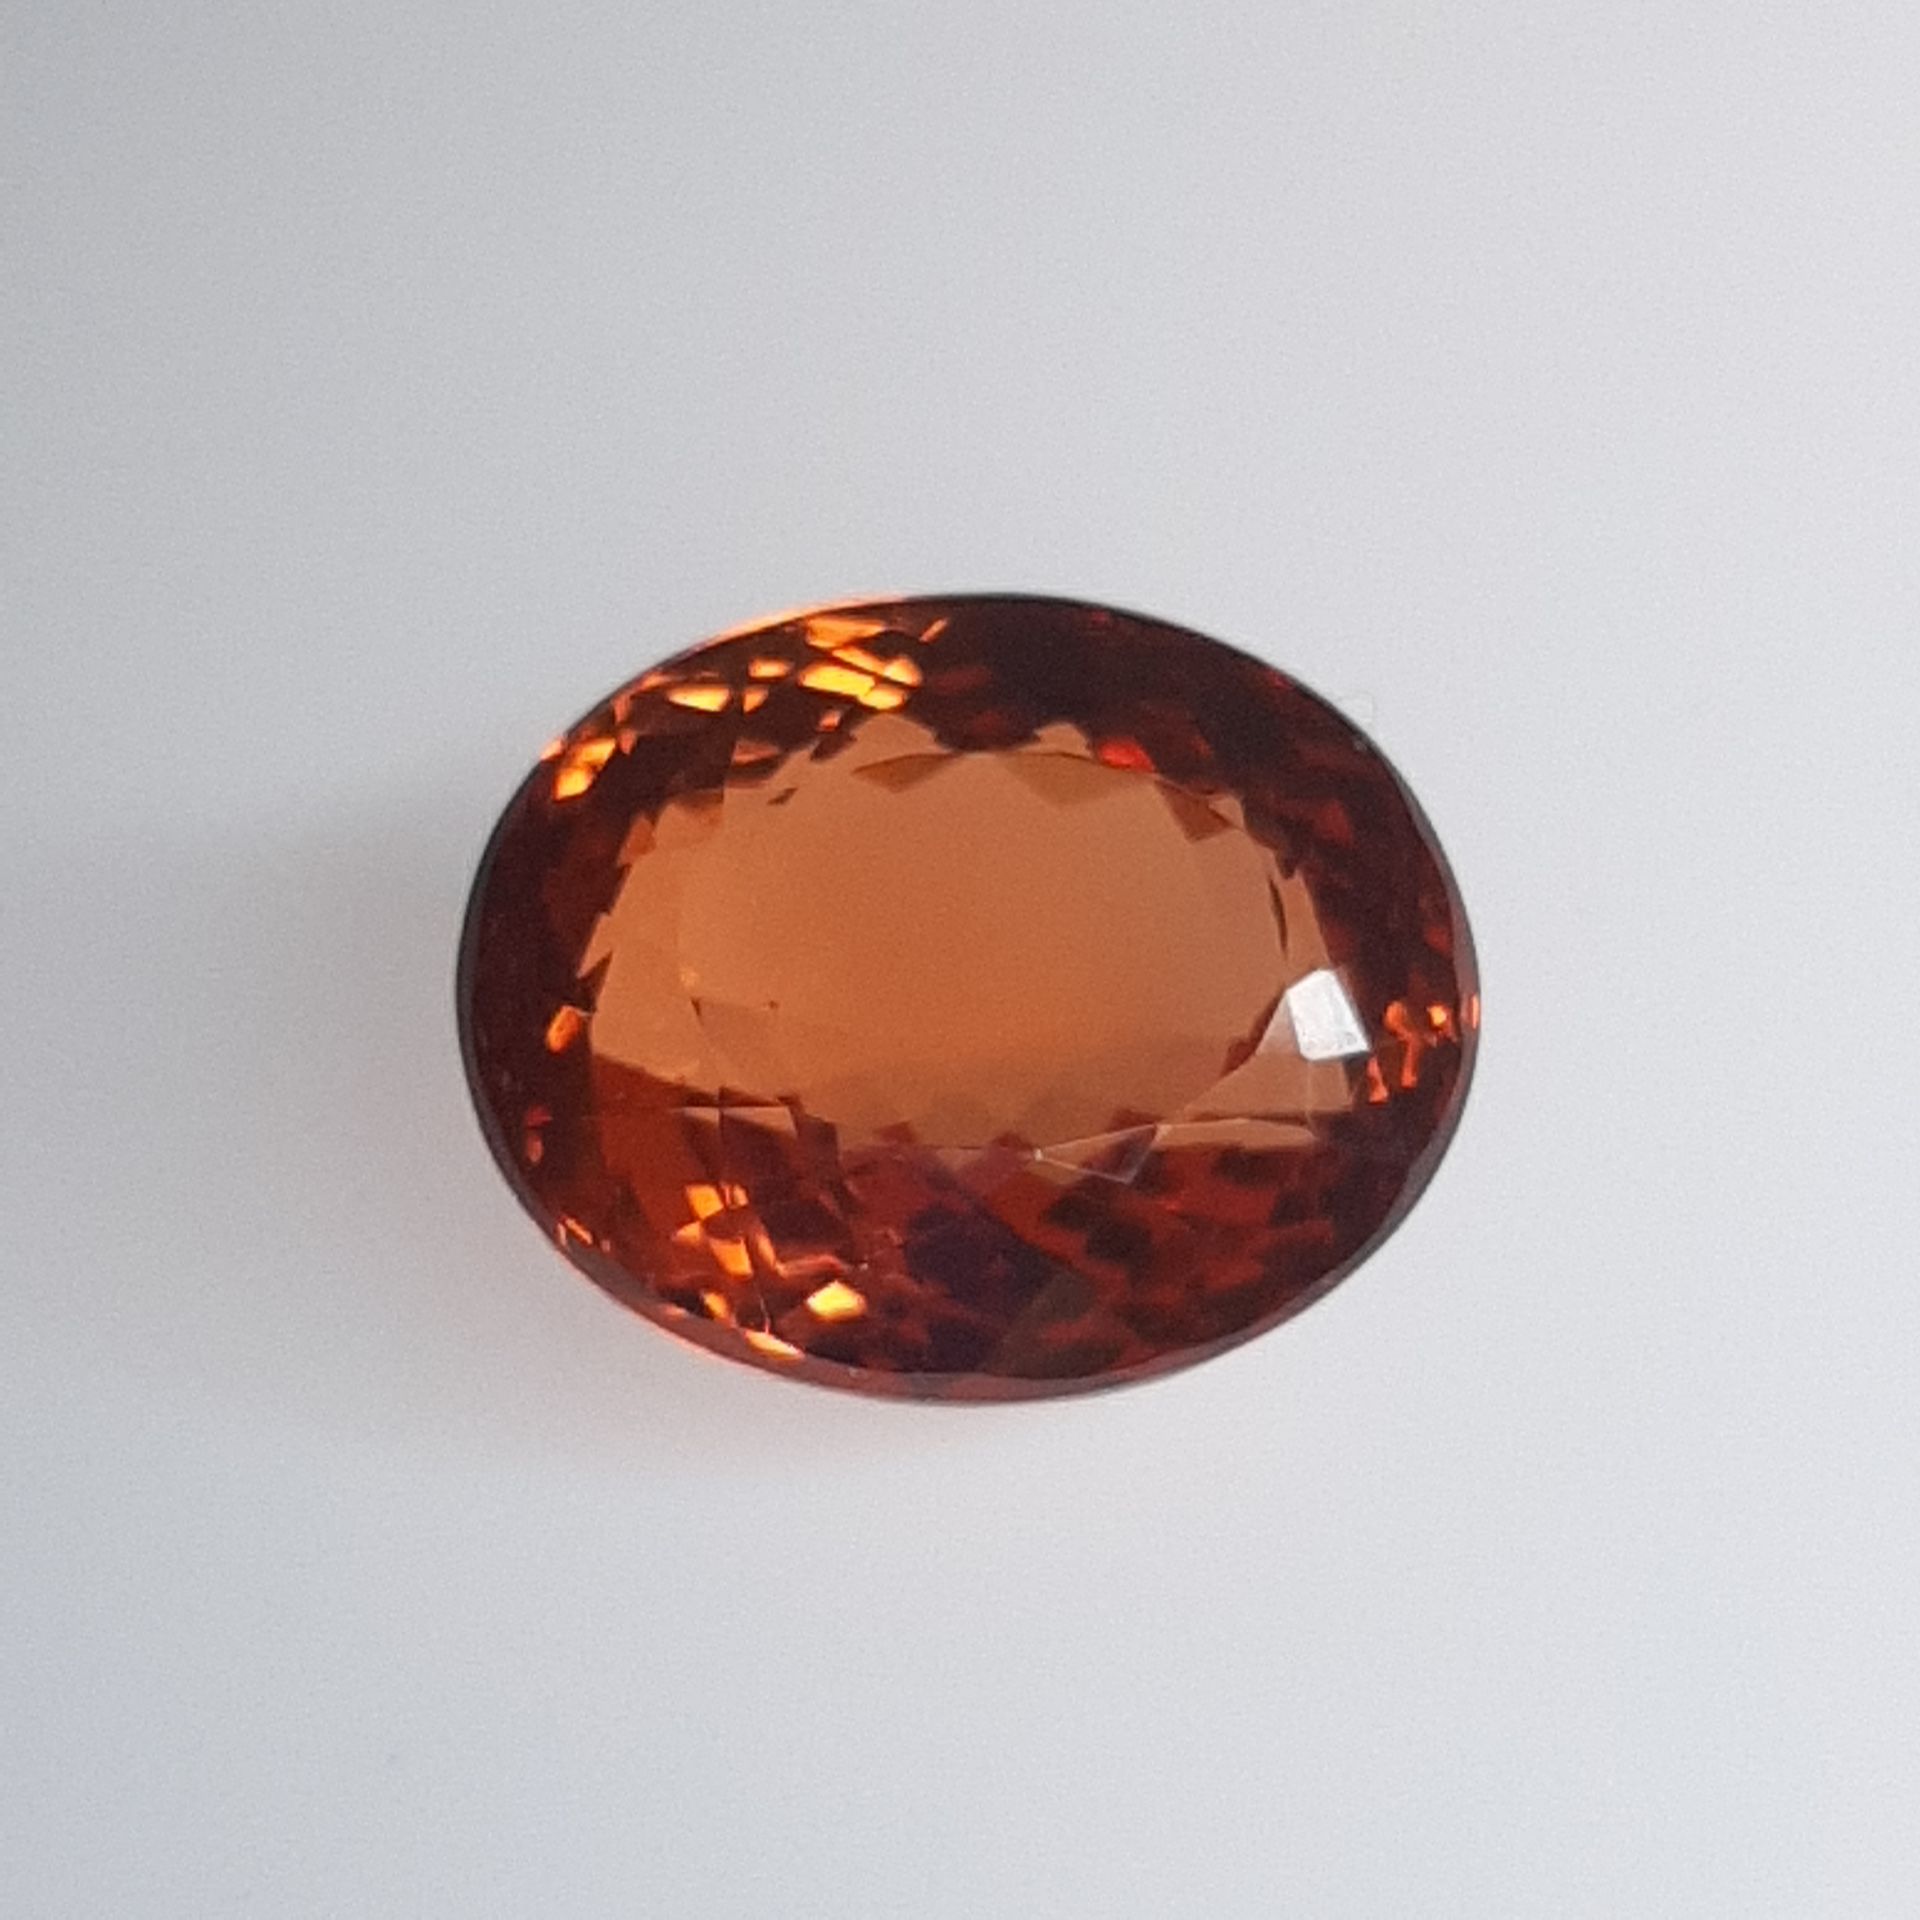 Spessartite - BRESIL - 9.82 cts 贝壳石 - 产自巴西 - 明亮的橙色 - 椭圆形 - 卓越和罕见的品质 - 重量9.82克拉 -&hellip;